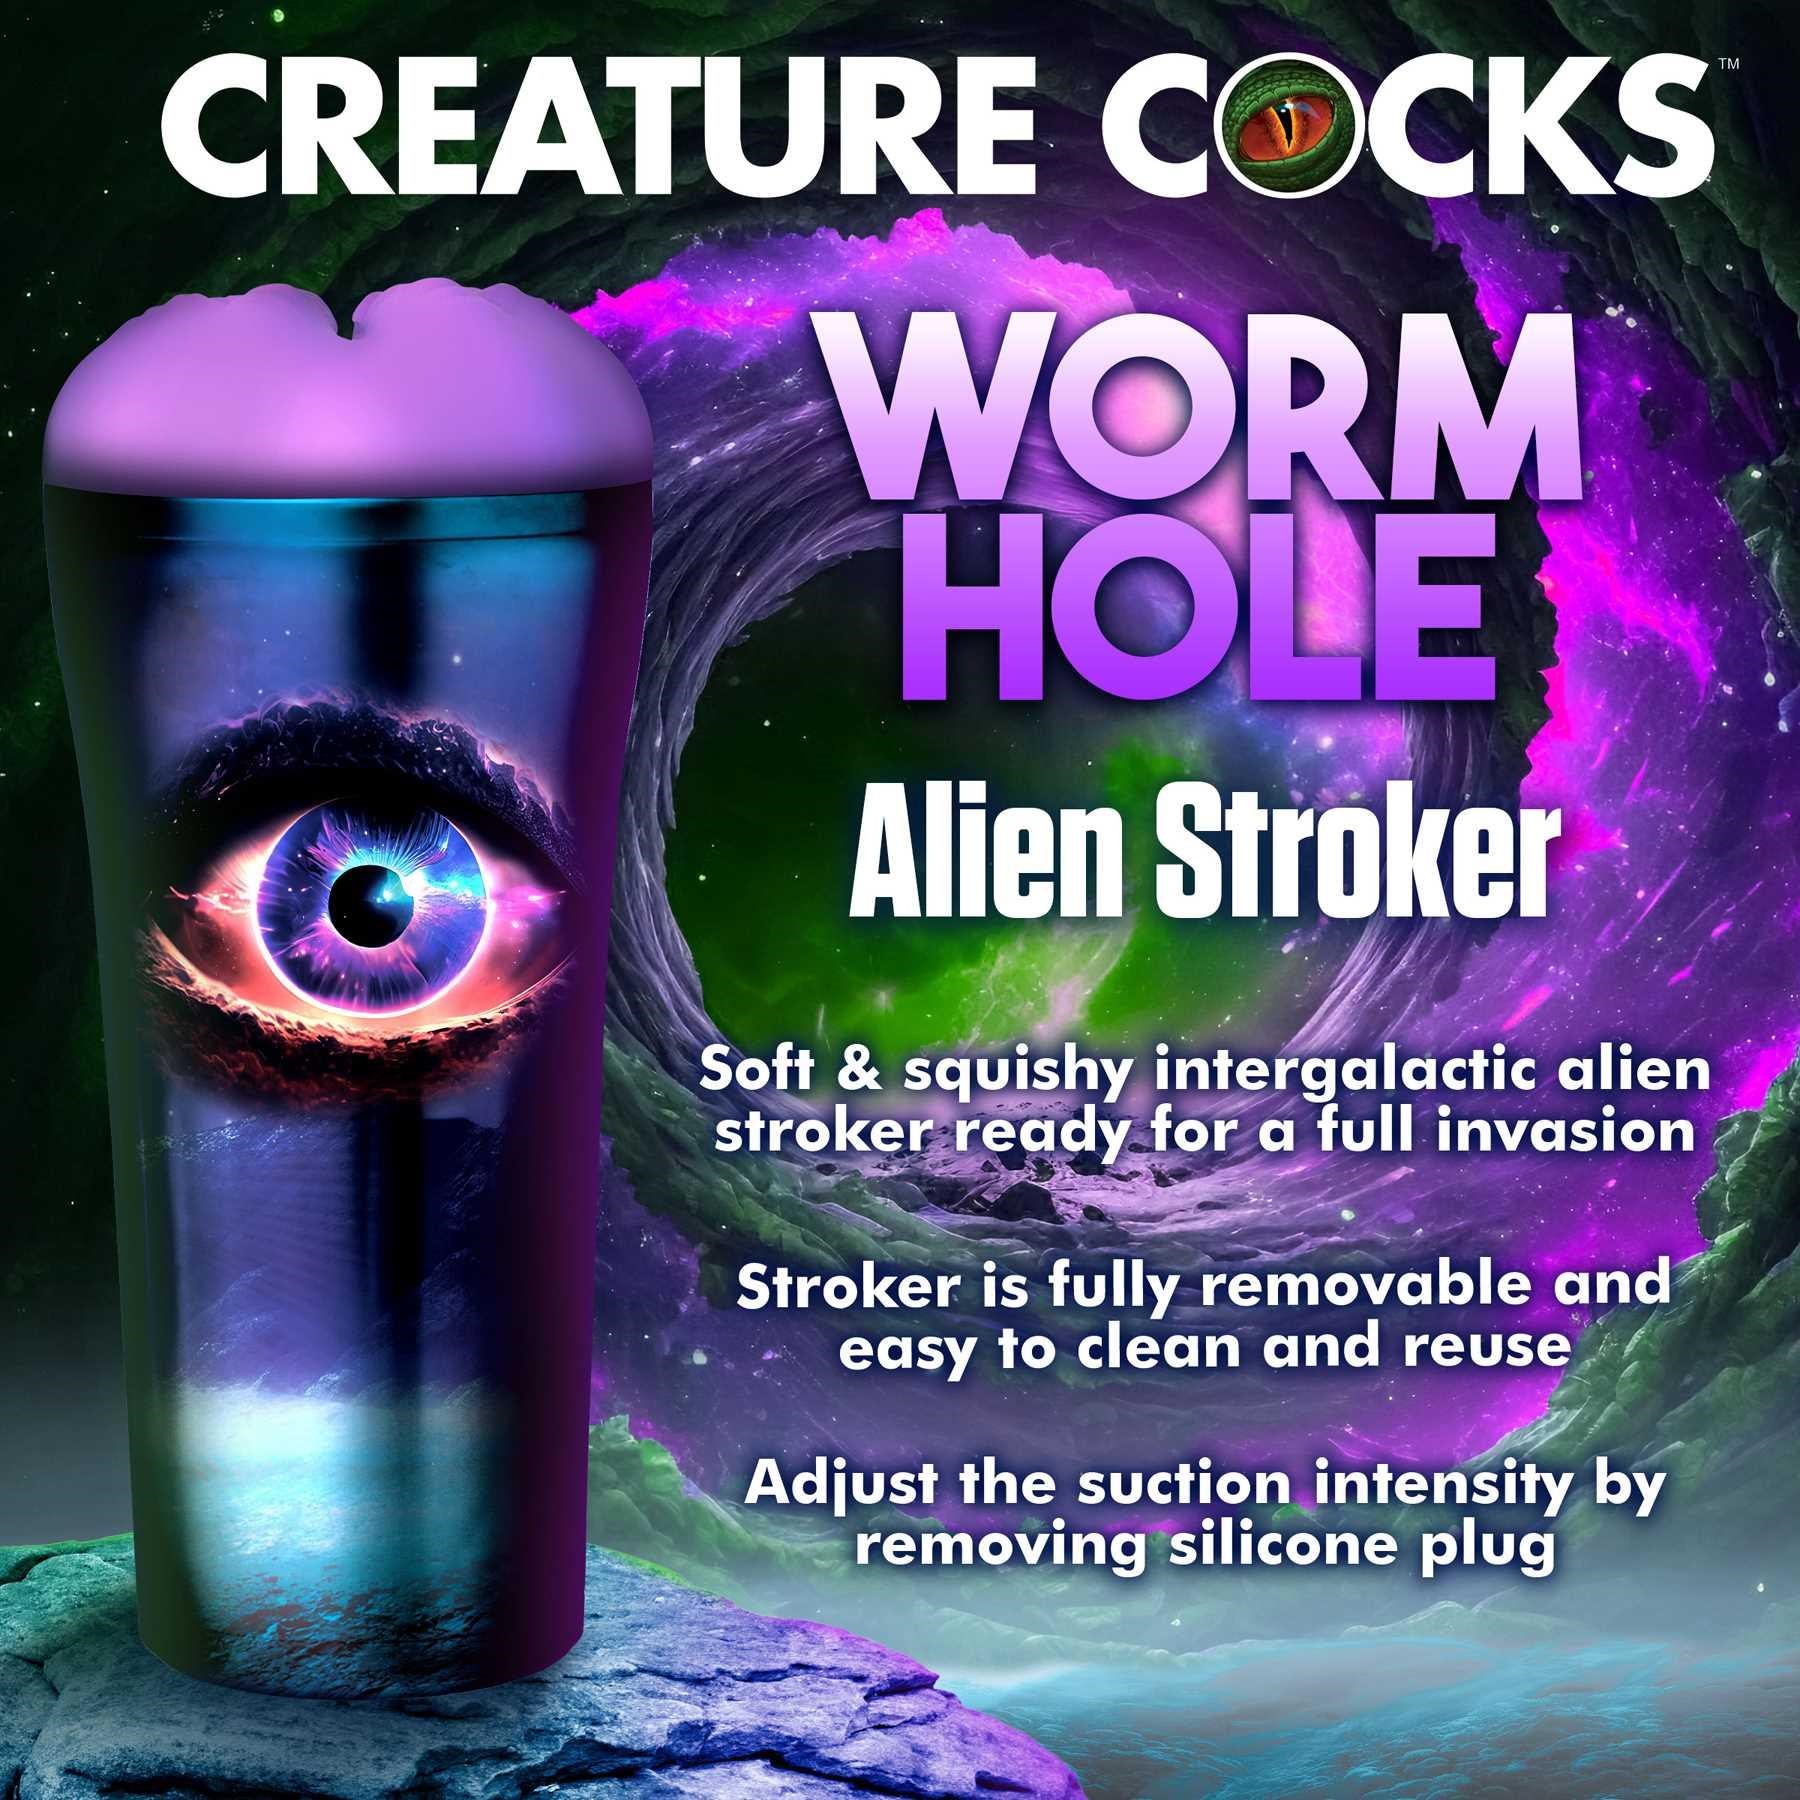 Creature Cocks Wormhole Alien Stroker mood image #1